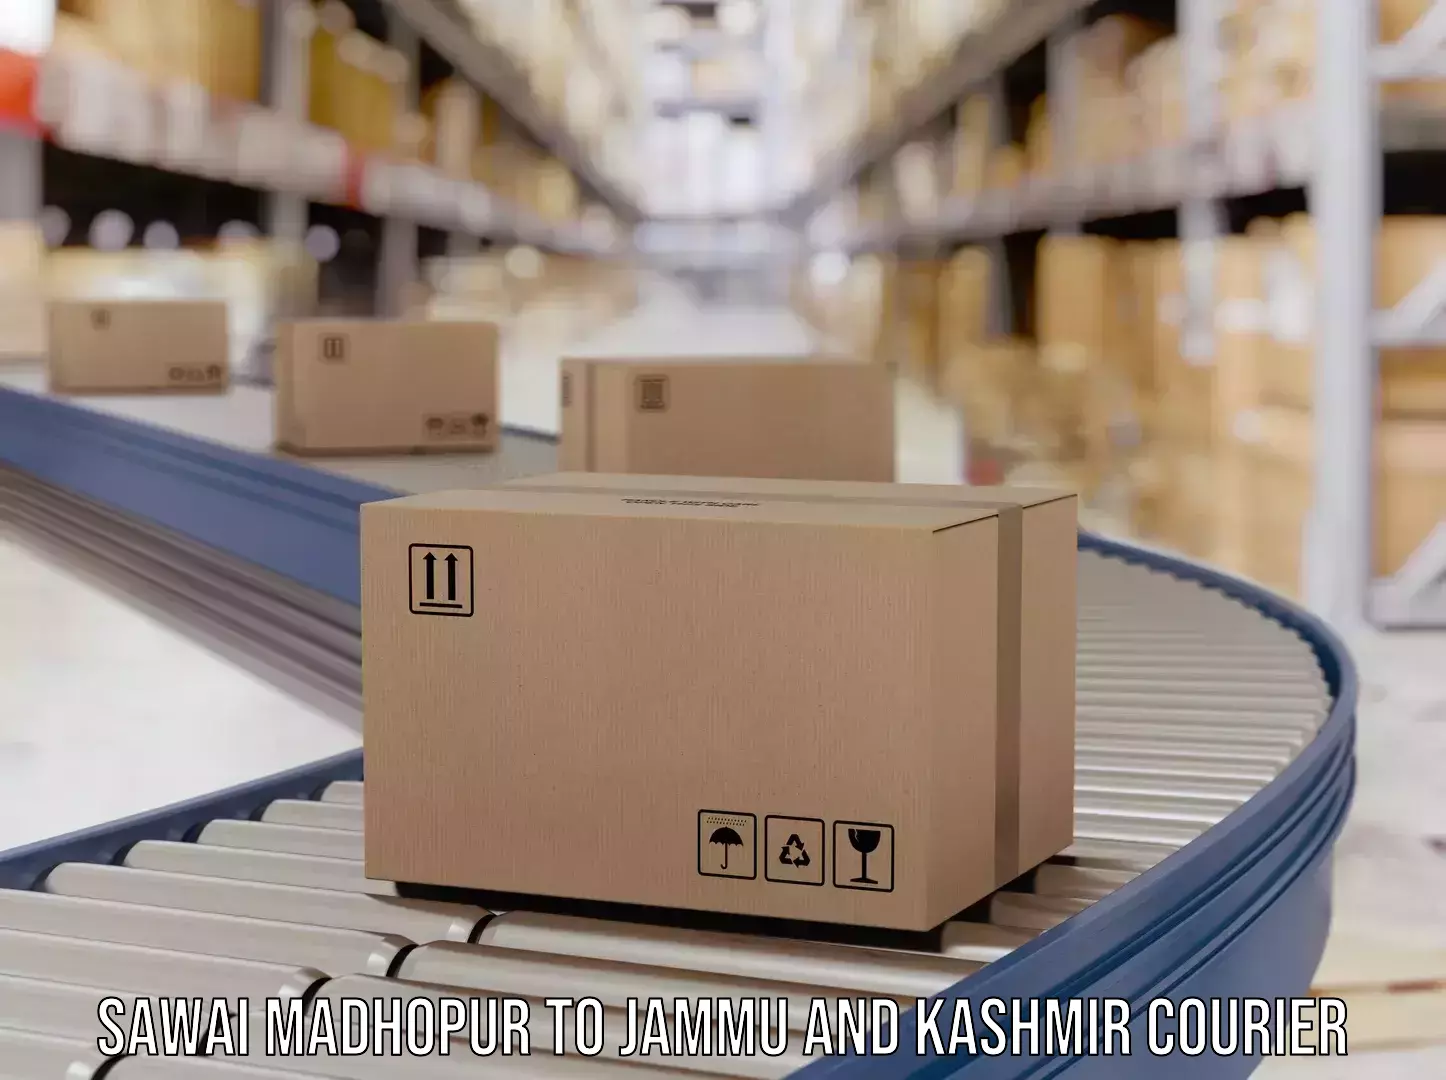 Full-service courier options Sawai Madhopur to Srinagar Kashmir